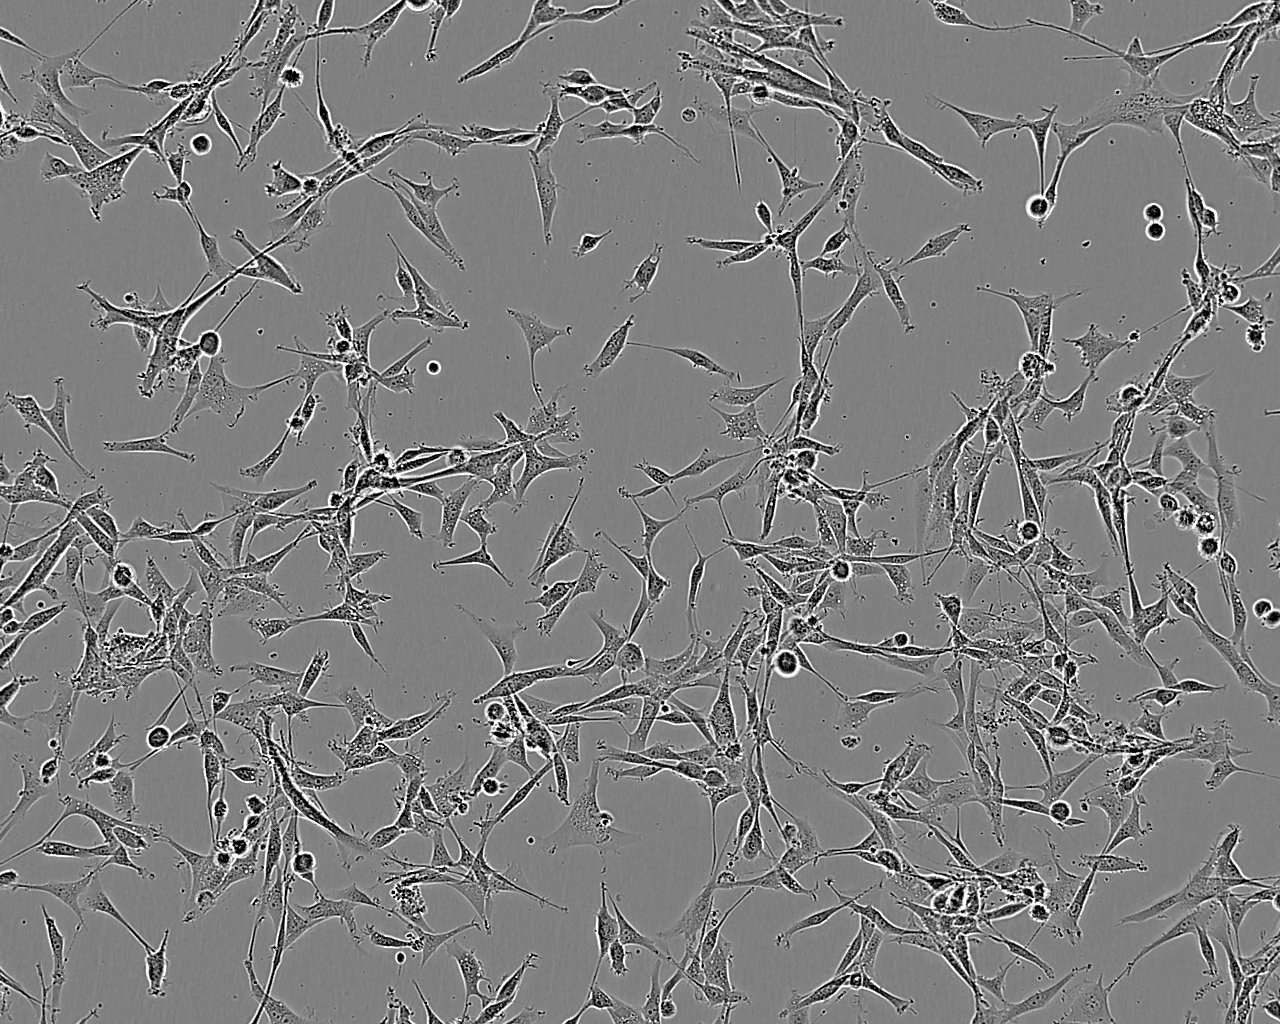 NCI-H676B epithelioid cells人肺腺癌细胞系,NCI-H676B epithelioid cells